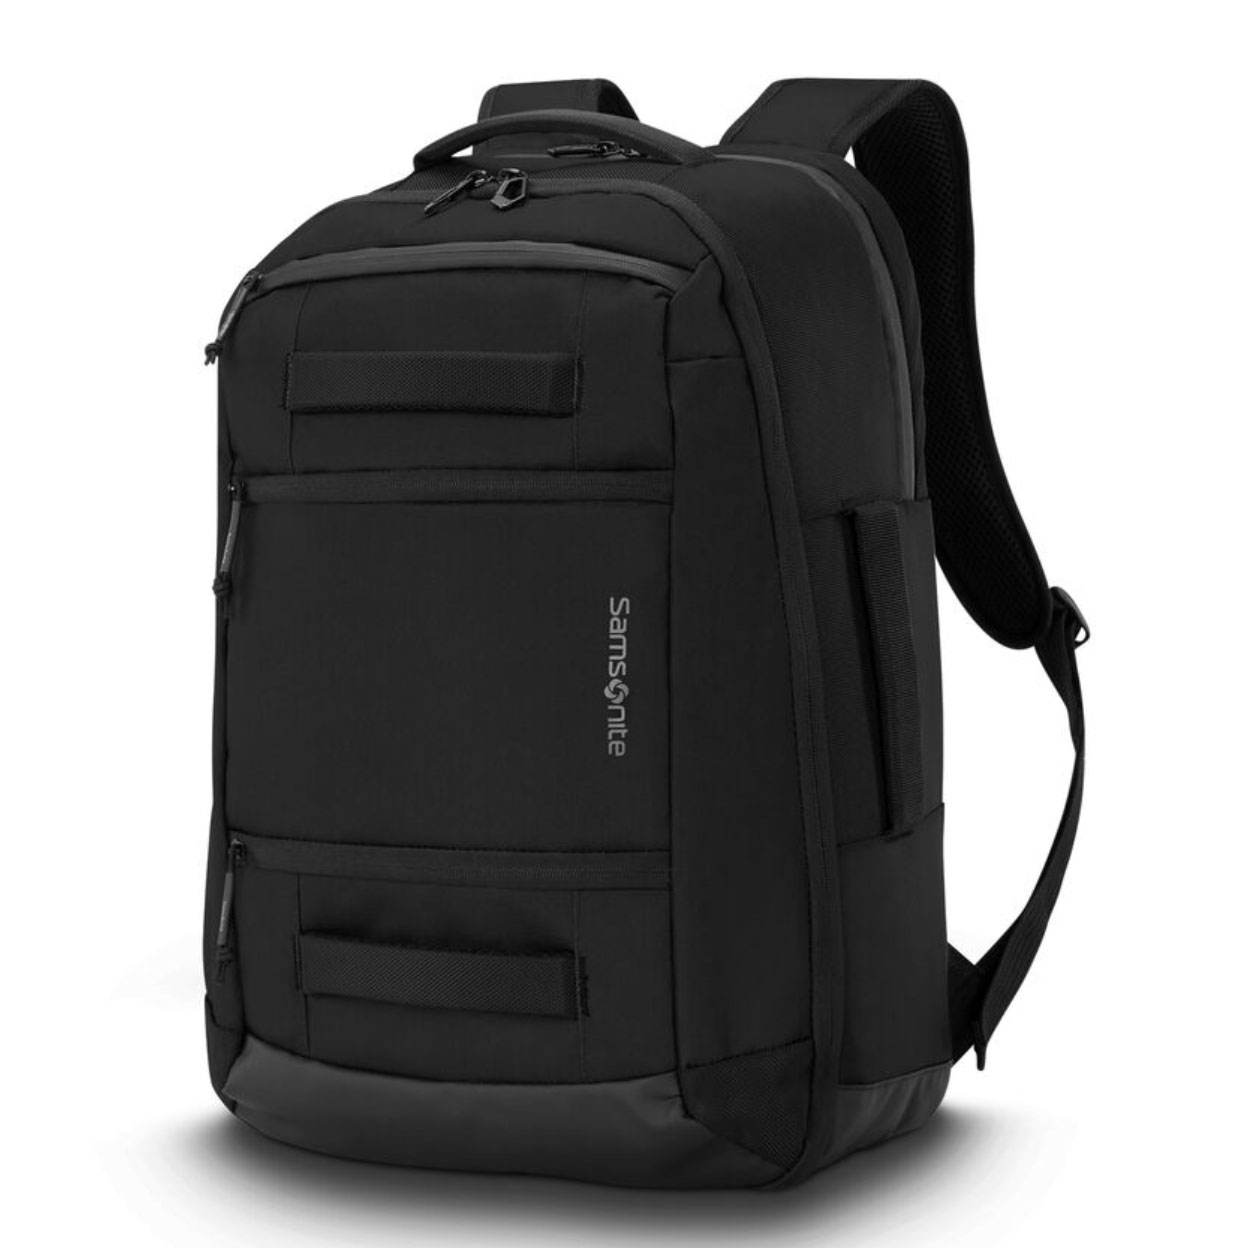 Minimalistic black backpack